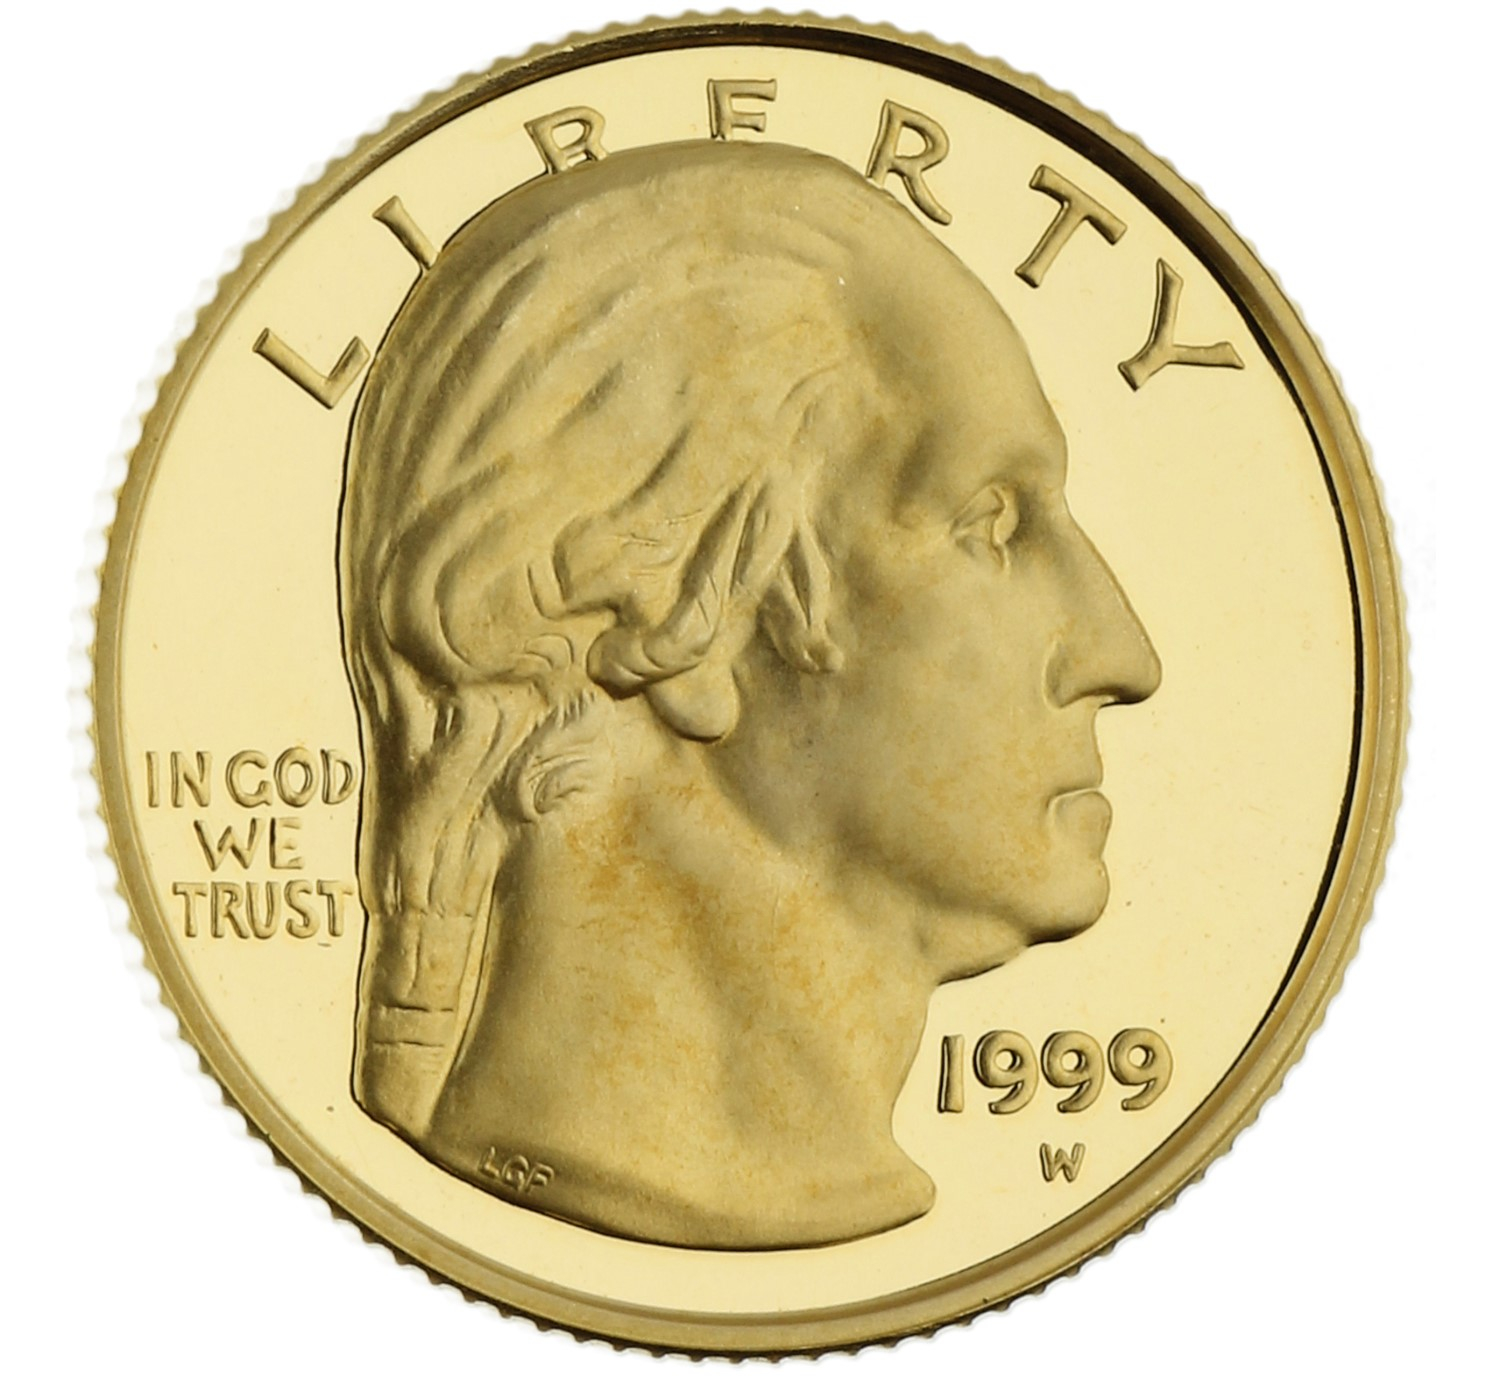 5 Dollars - USA - 1999 W